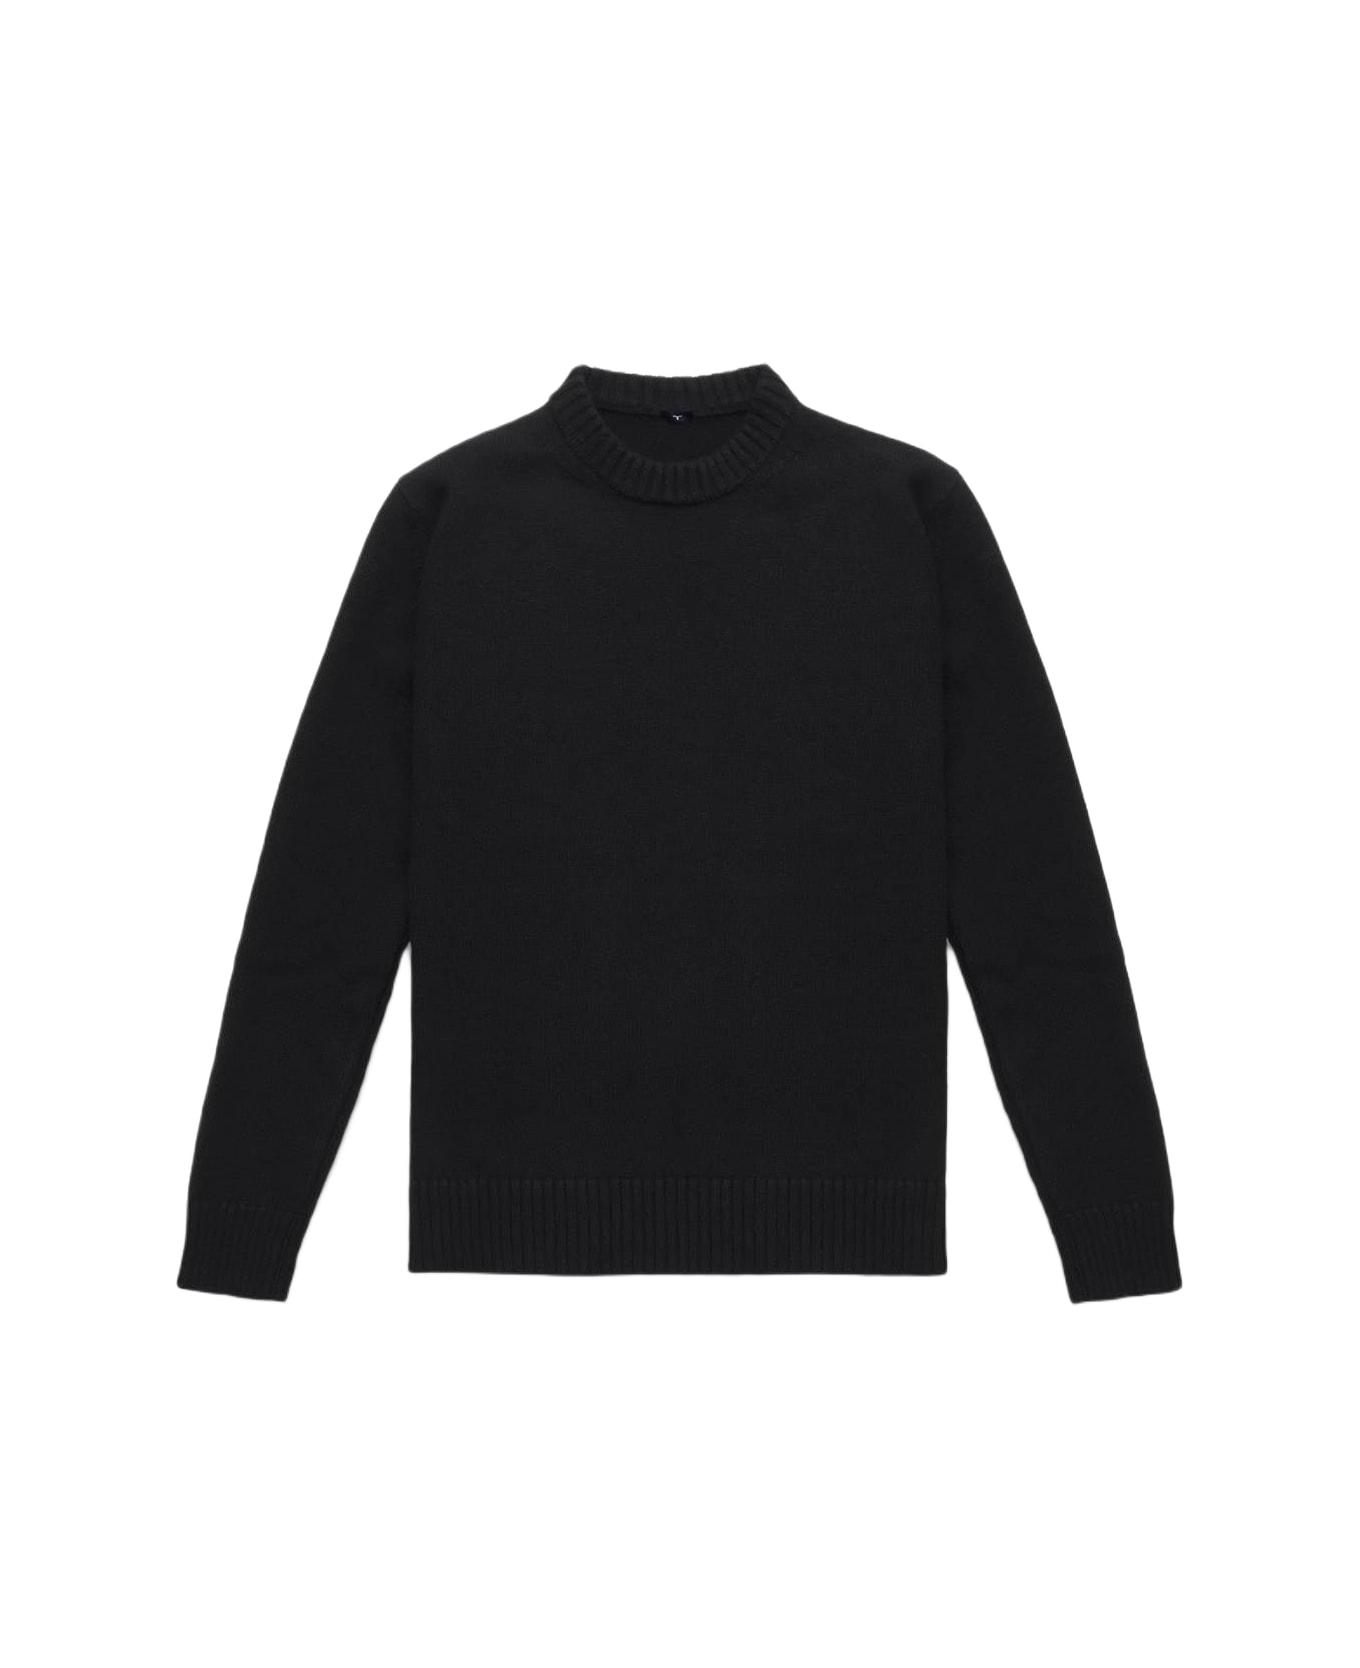 Larusmiani Crew Neck Sweater 'diablerets' Sweater - Black